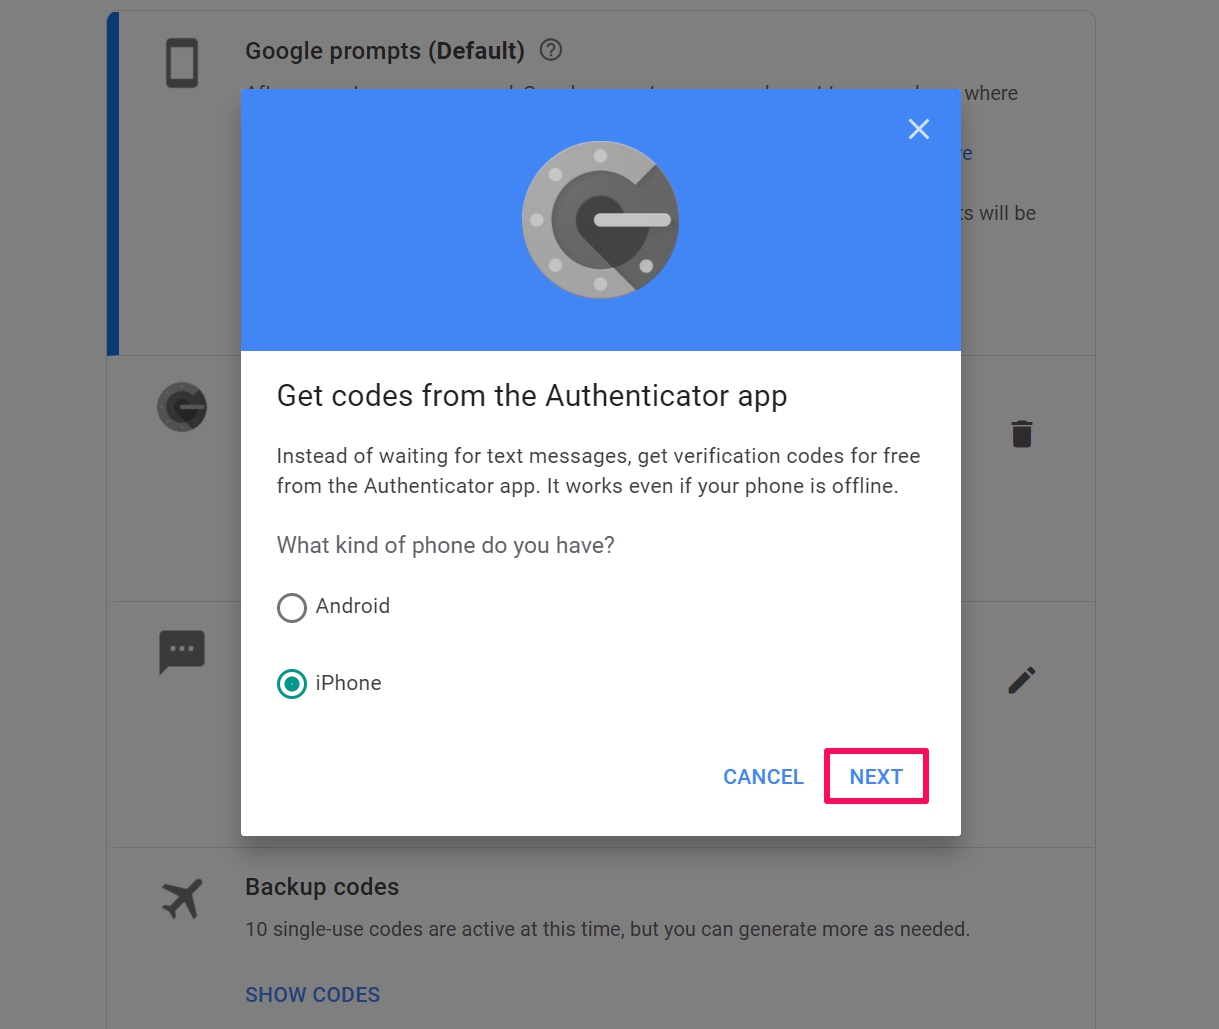 transfer google authenticator to new phone